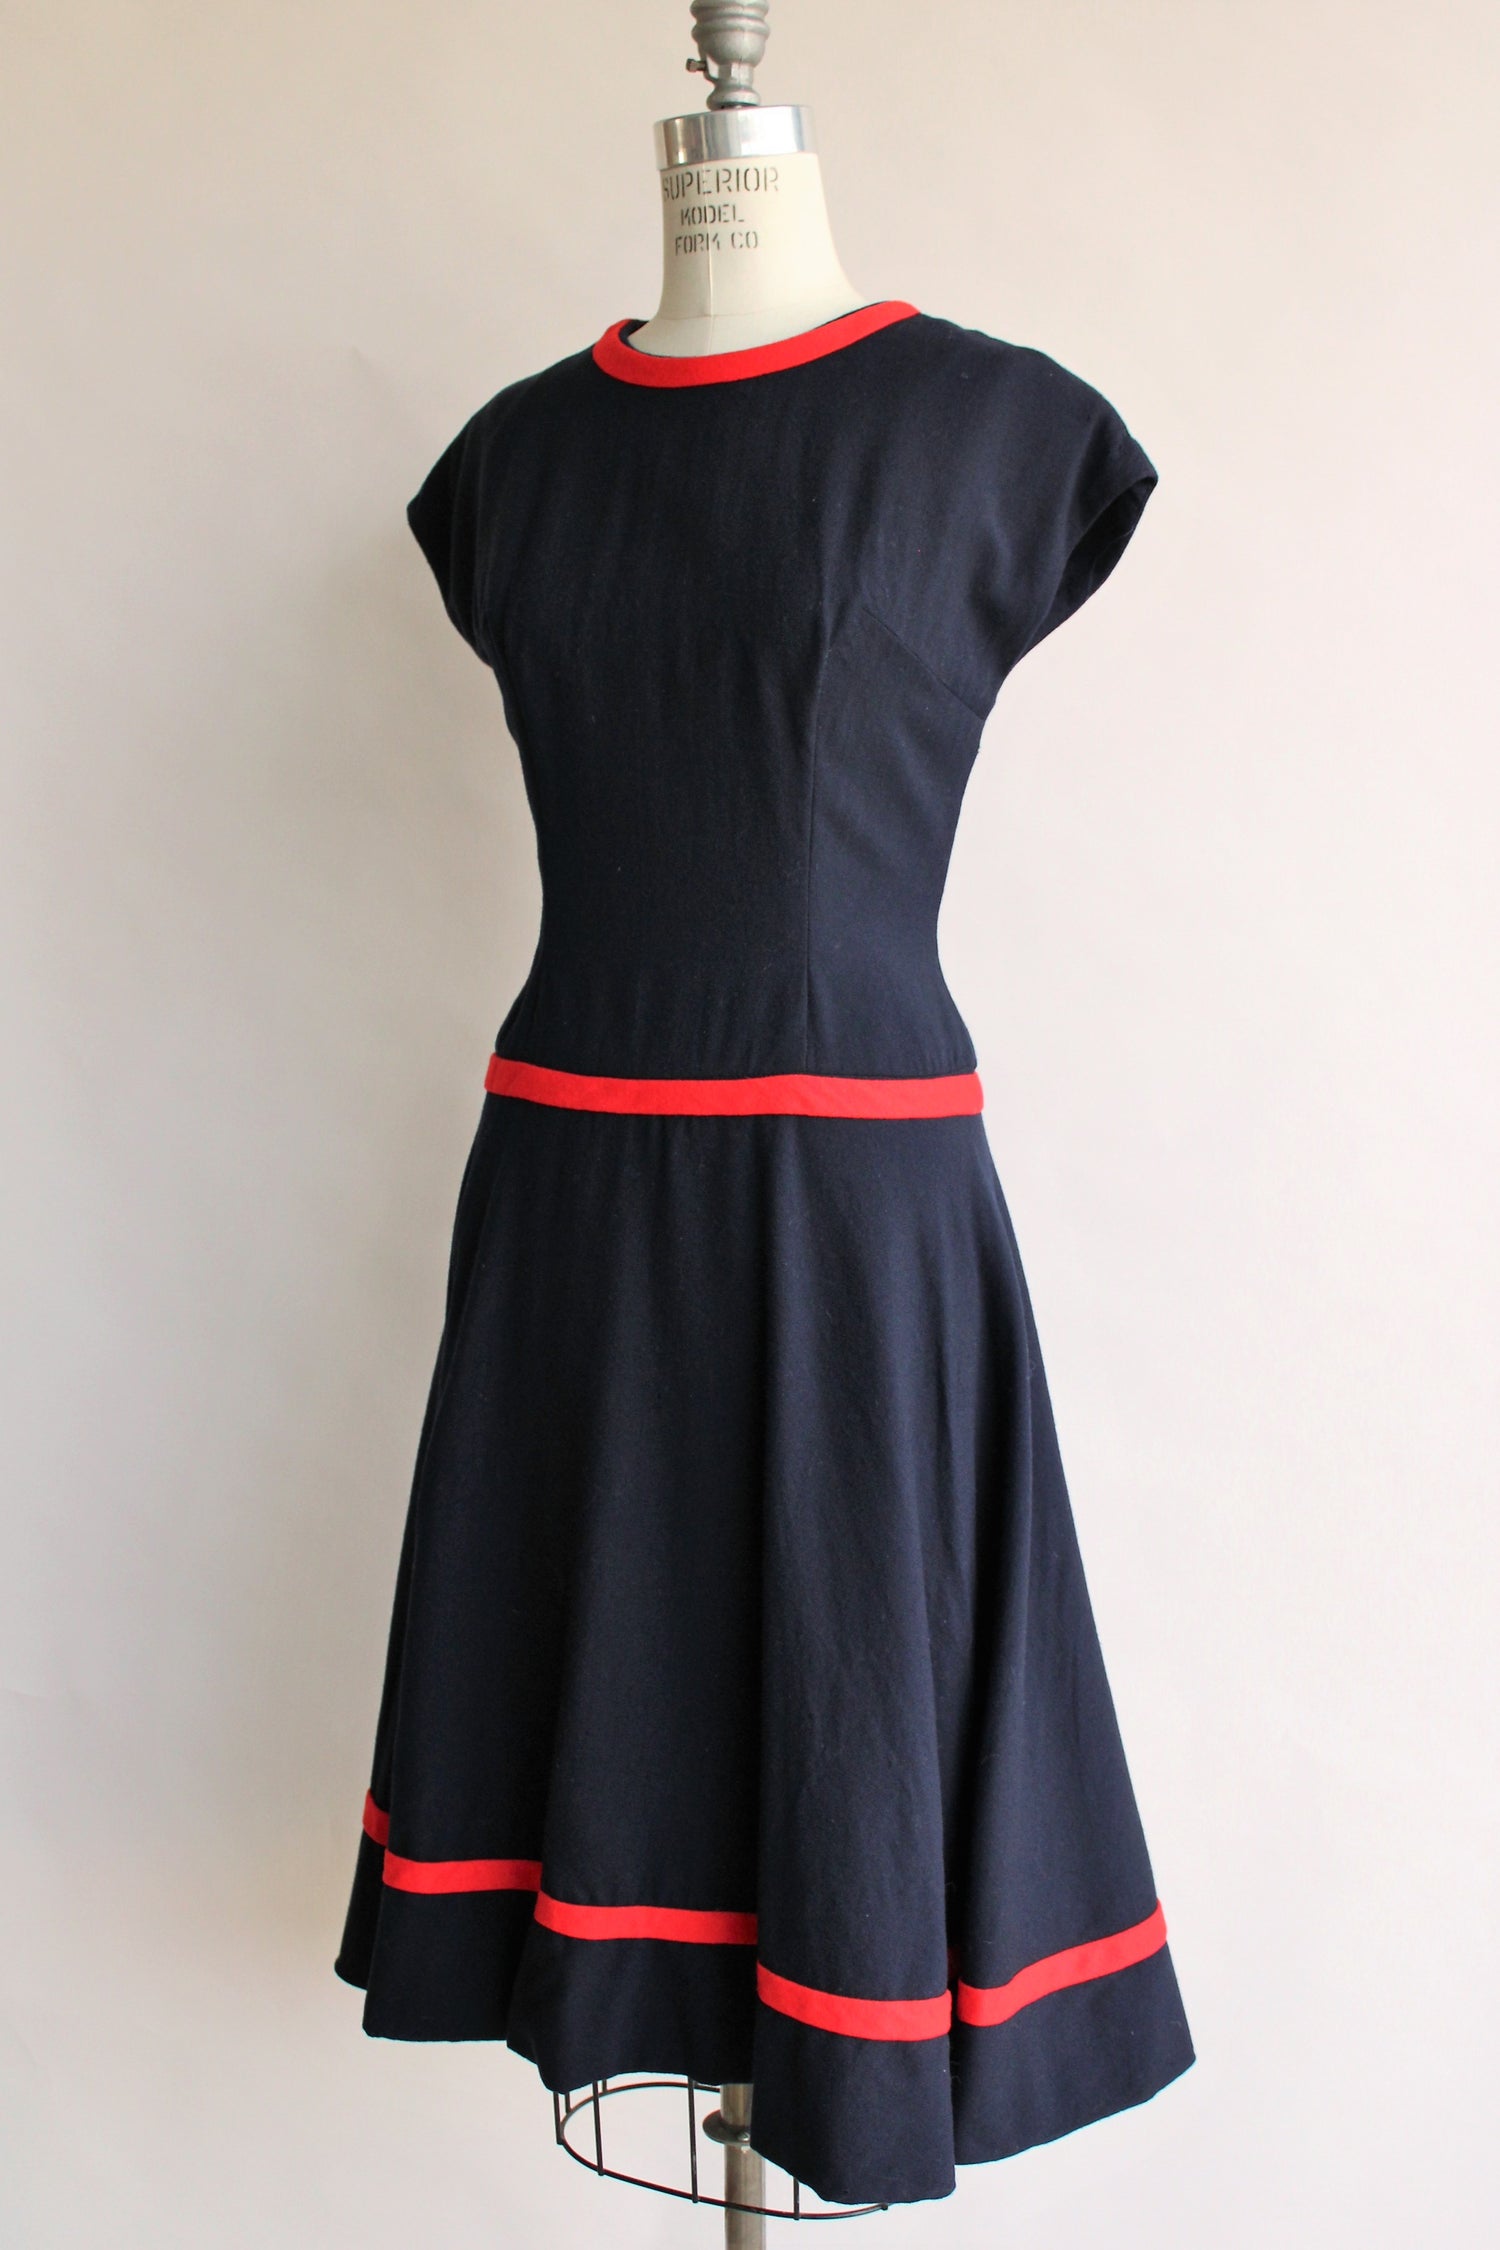 Vintage 1950s 1960s Navy Blue Wool Dress